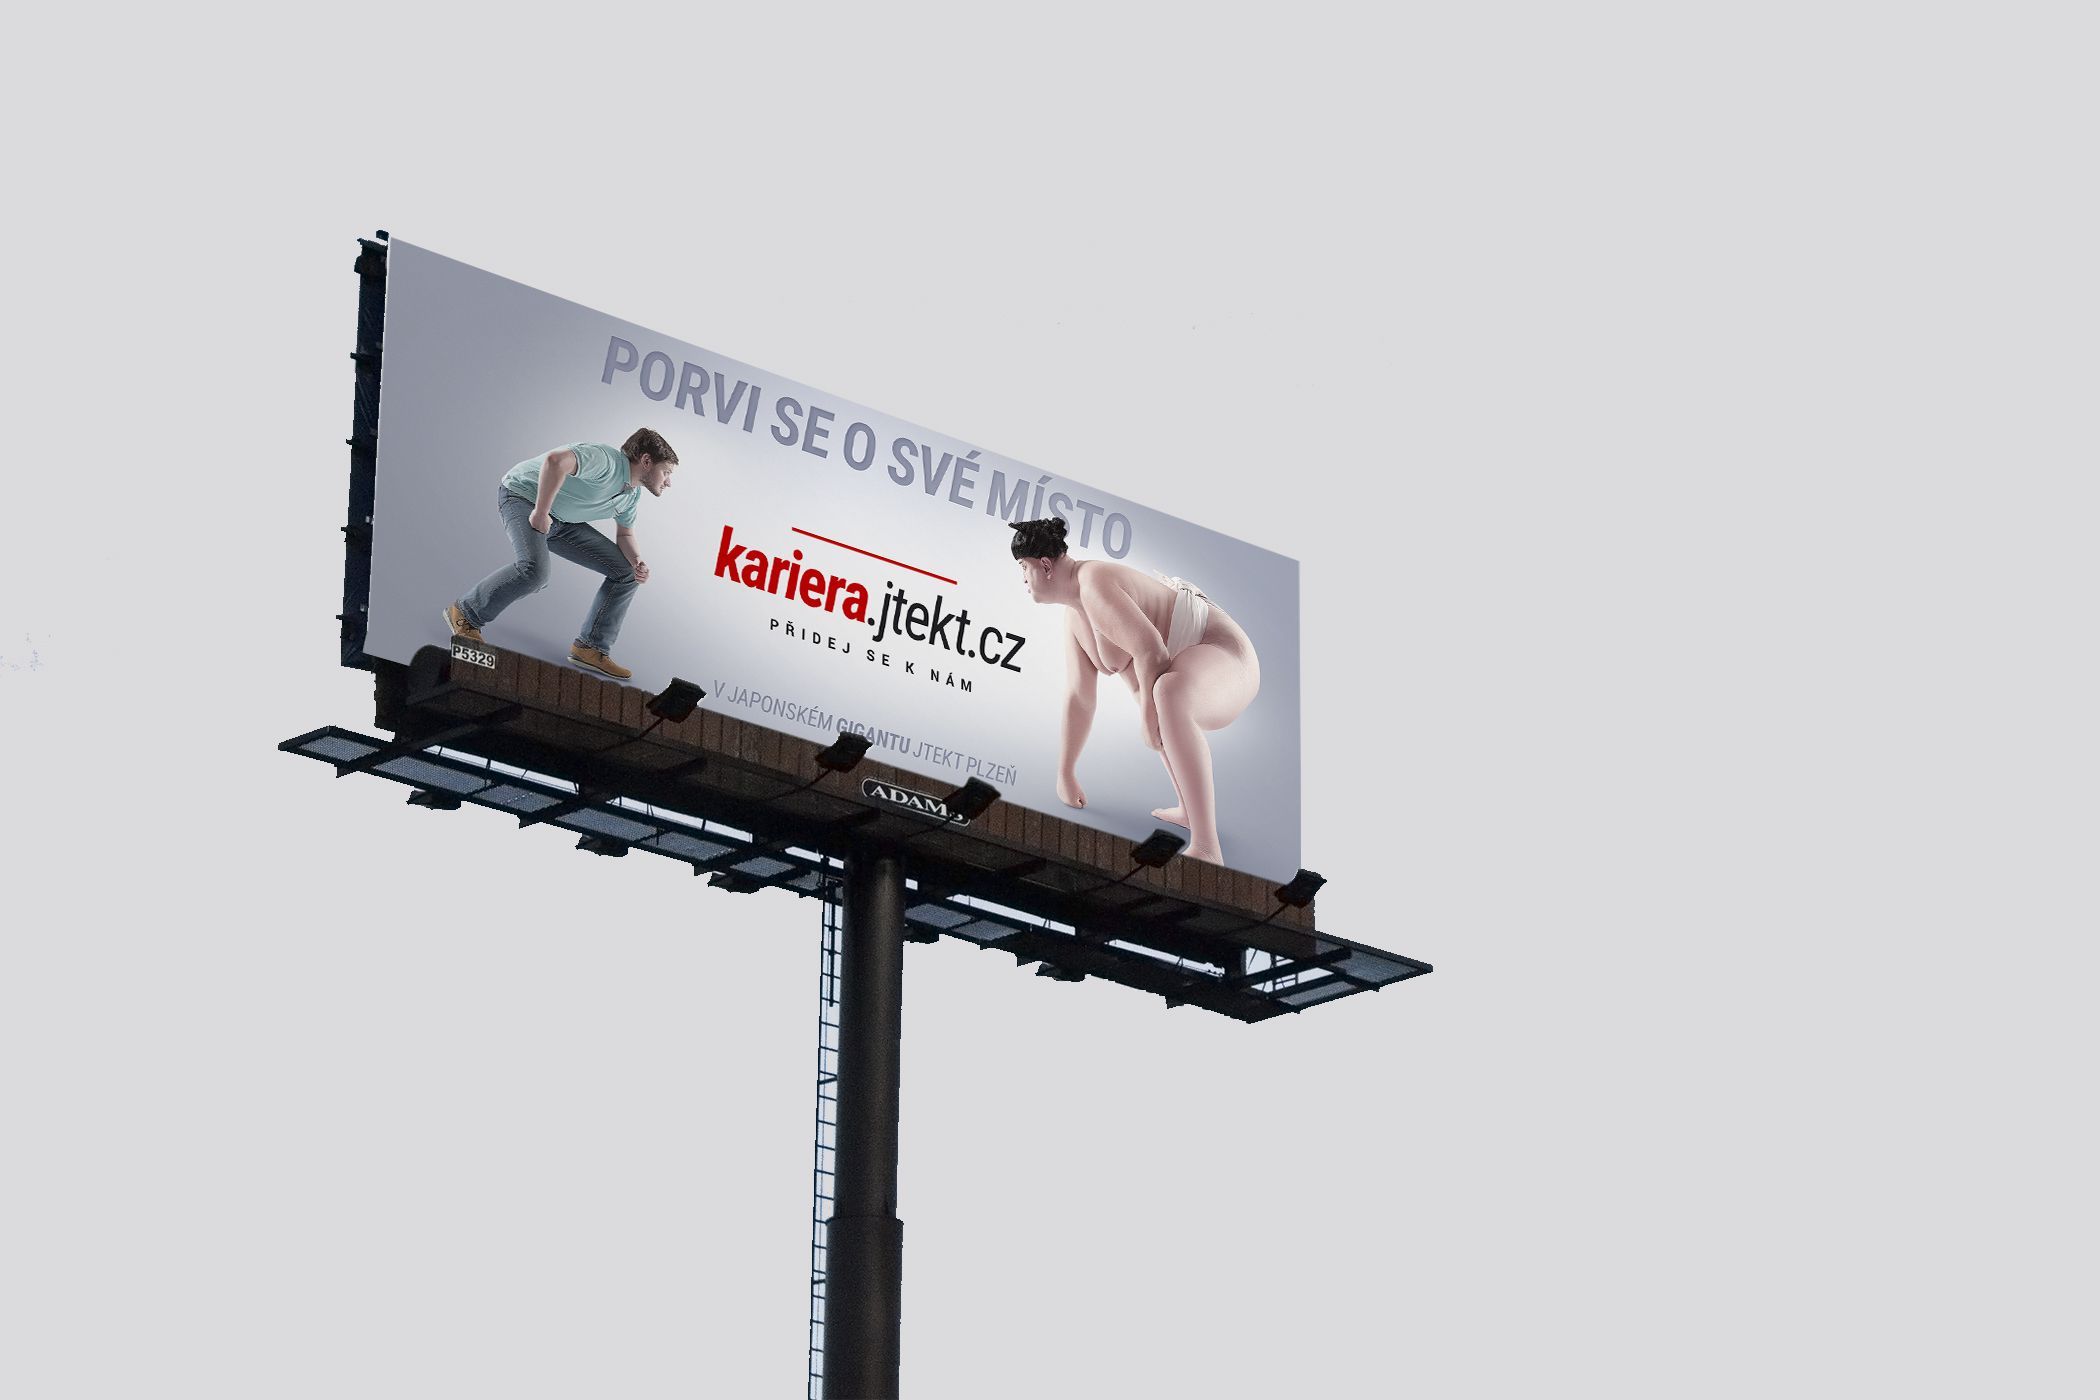 billboard-mockup